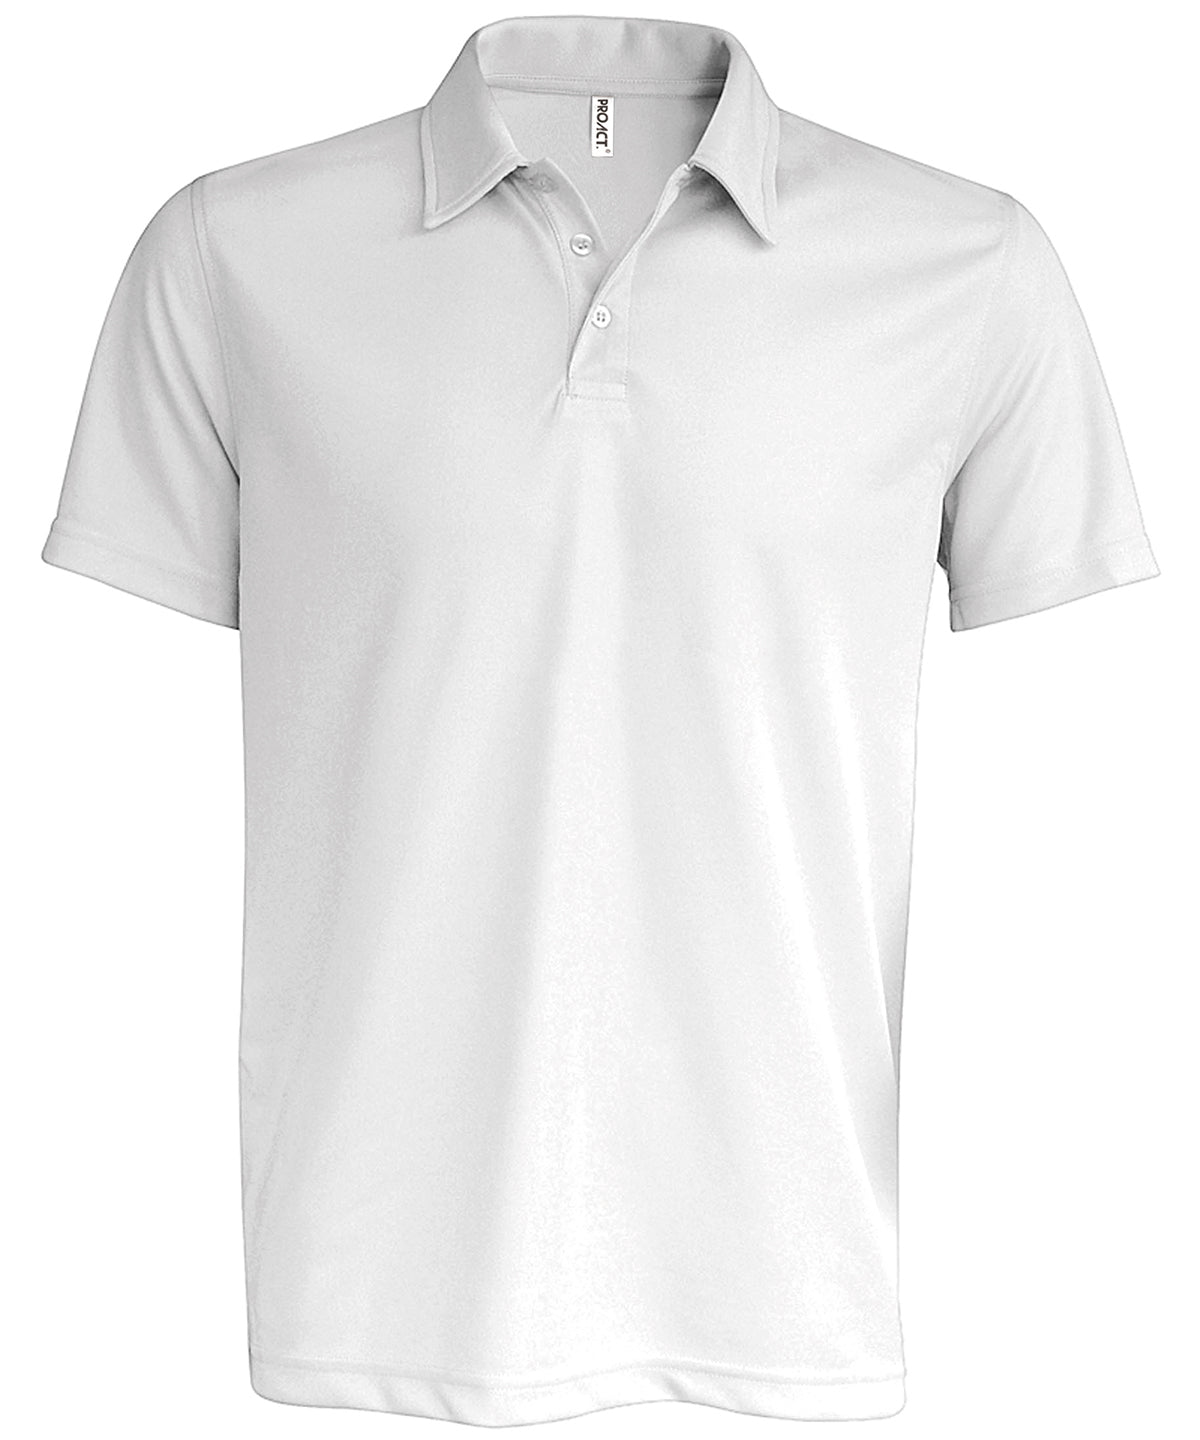 Pólóbolir - Men's Short-sleeved Polo Shirt